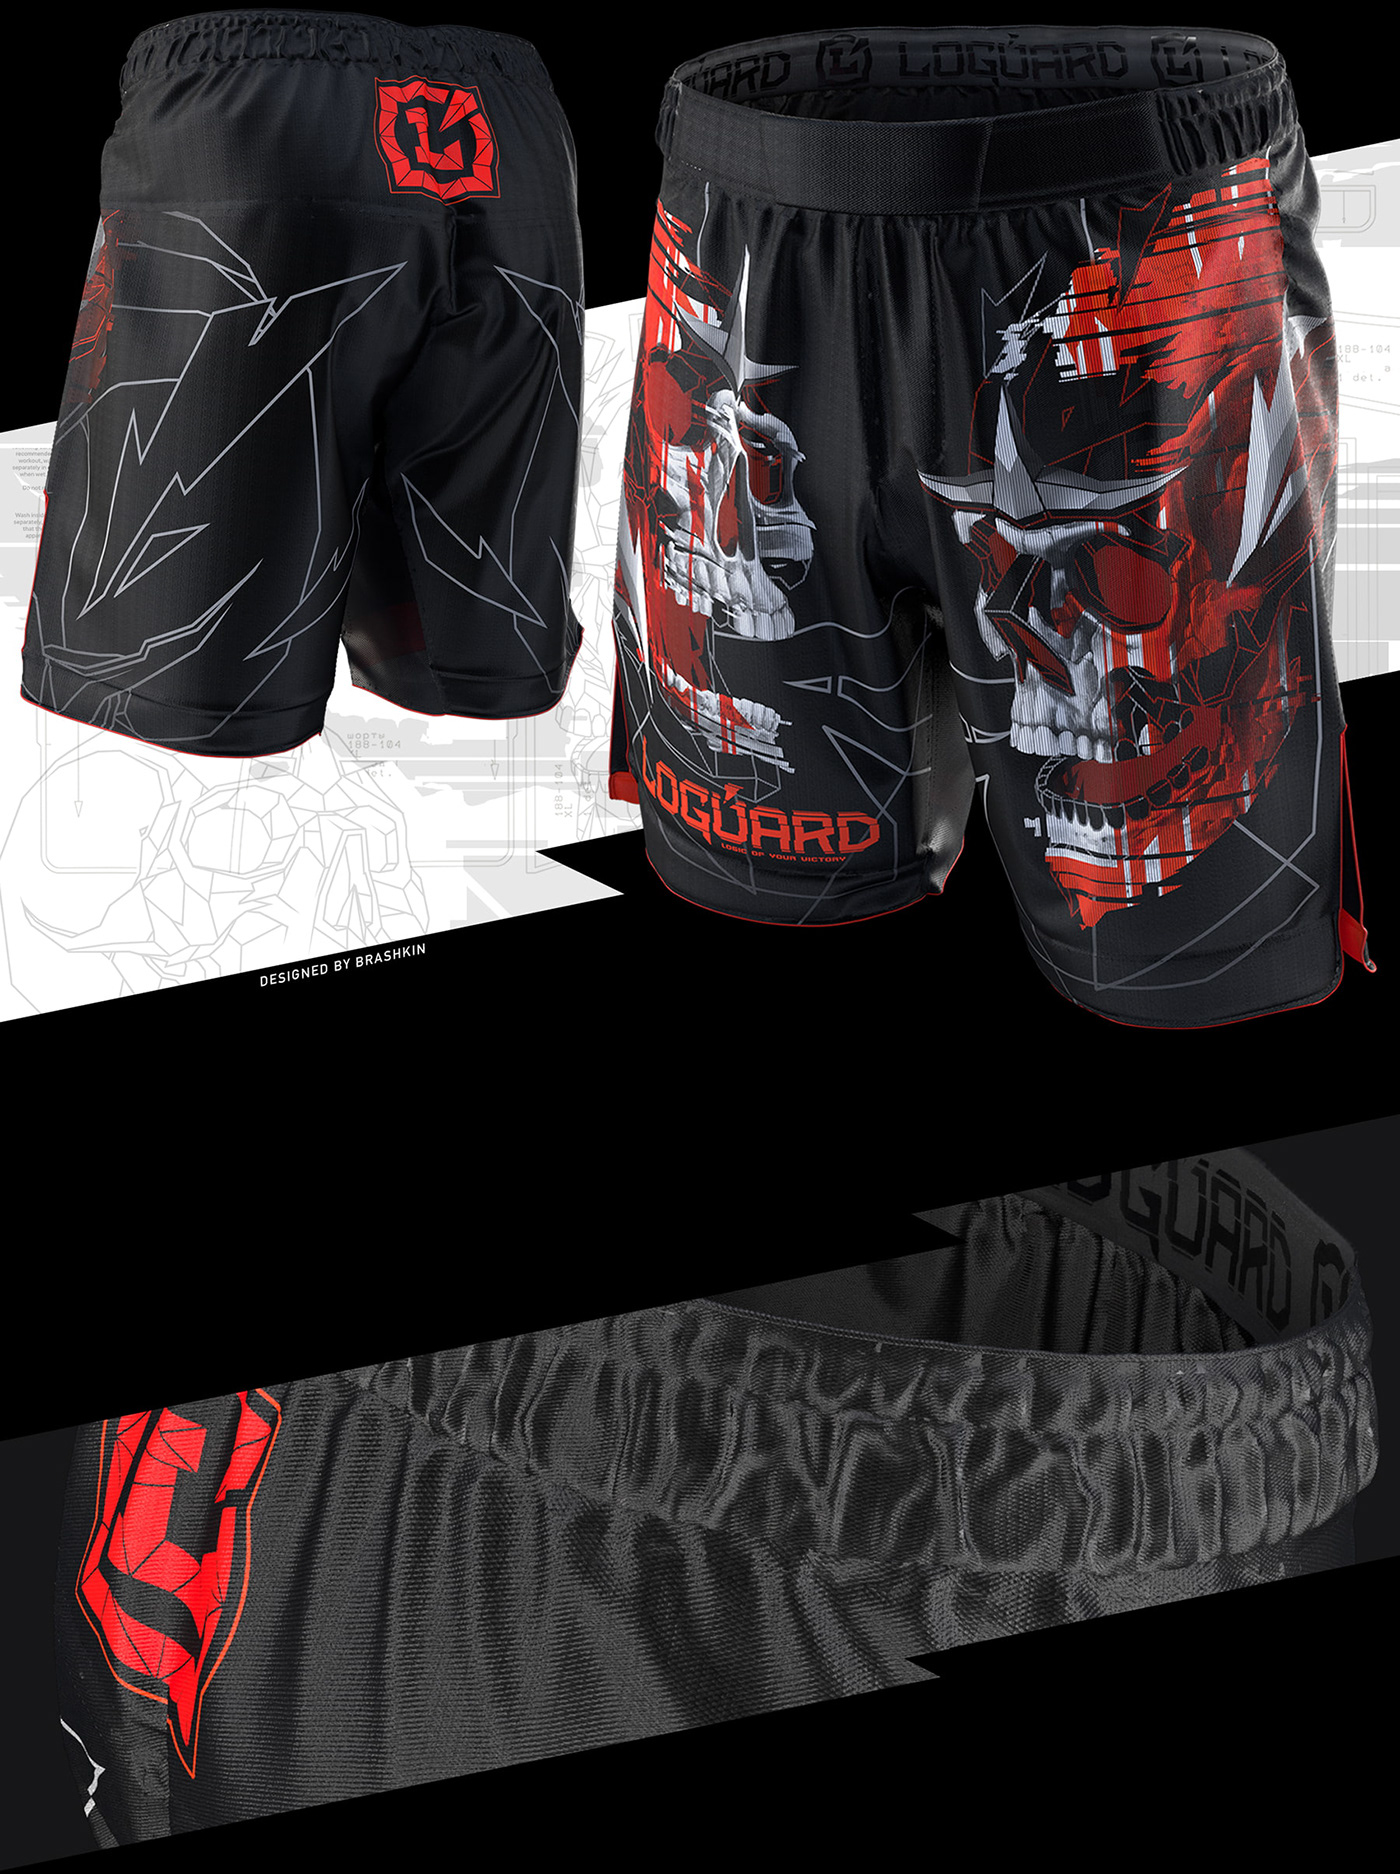 fightwear rashguard 3D Clothing Martial Arts BJJ Brand Design TECHWEAR sportwear MMA jiu jitsu